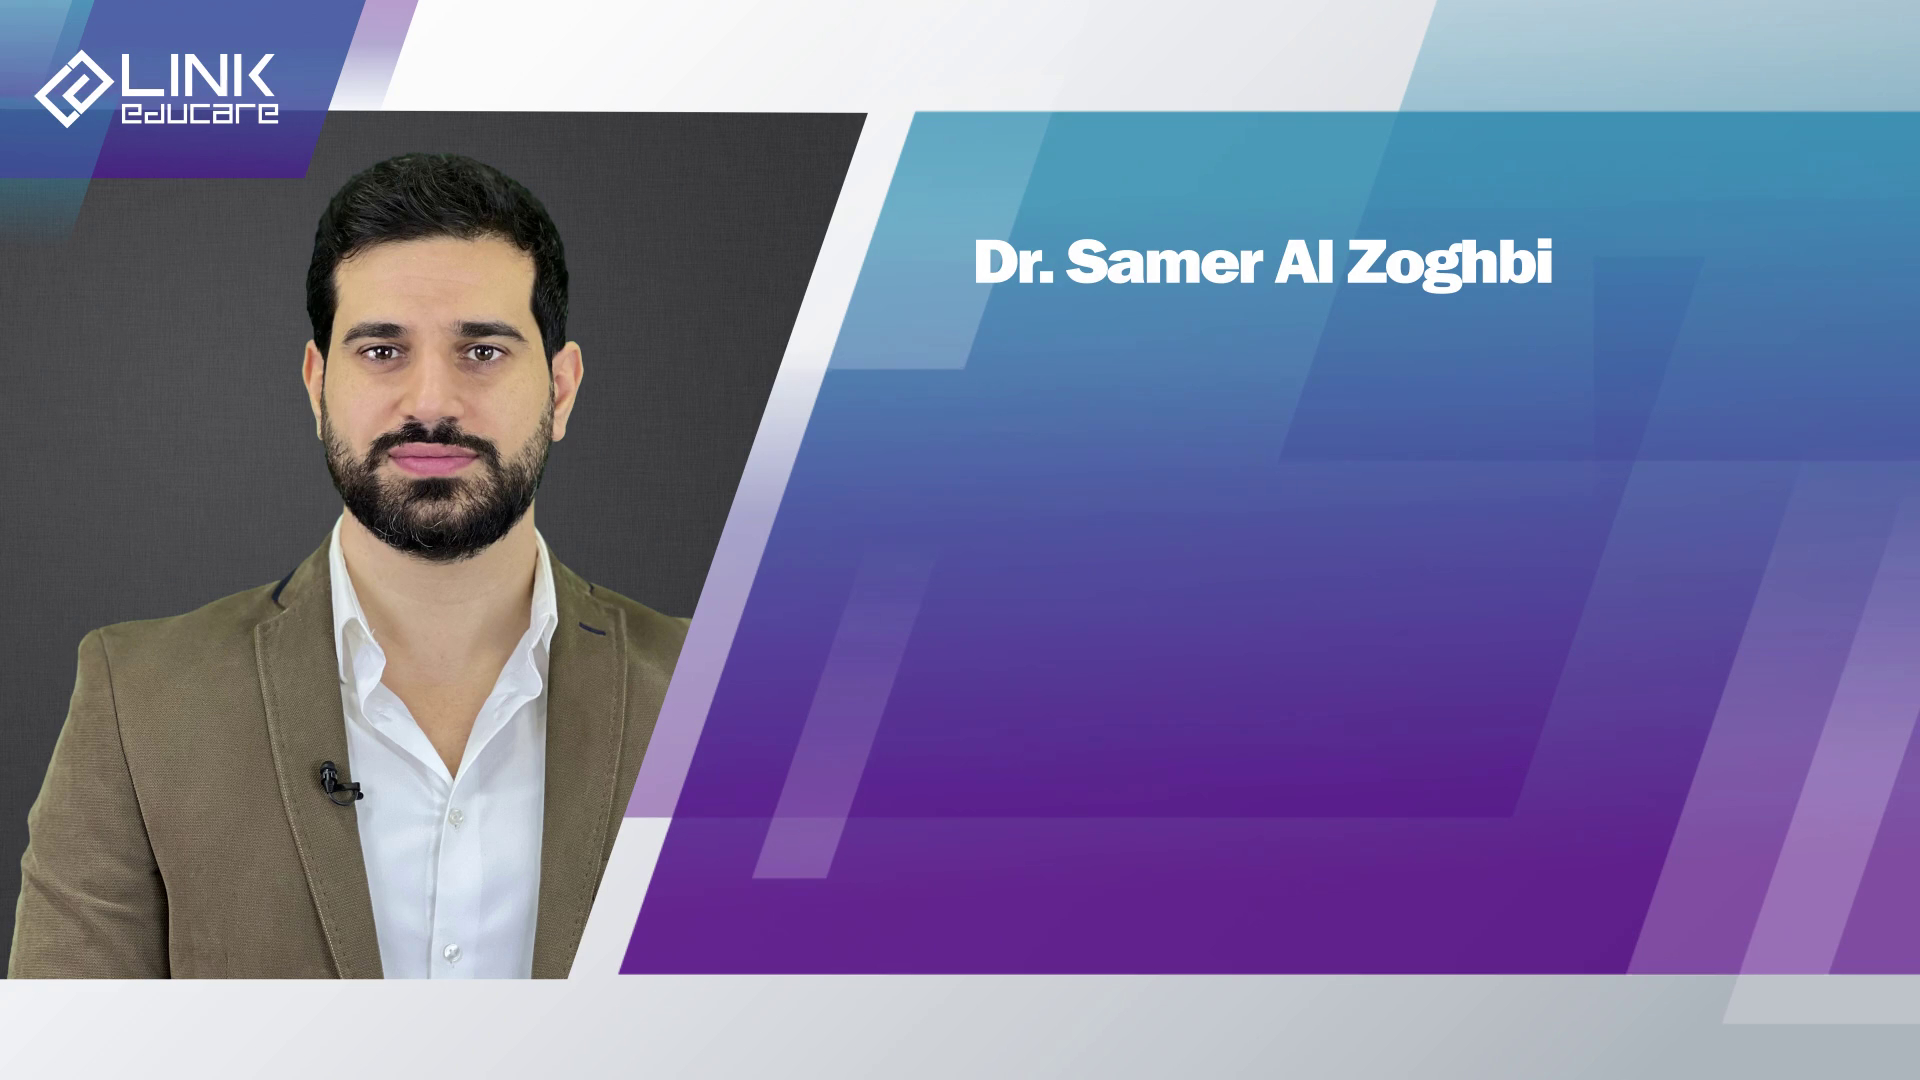 Dr. Samer Al Zoghbi